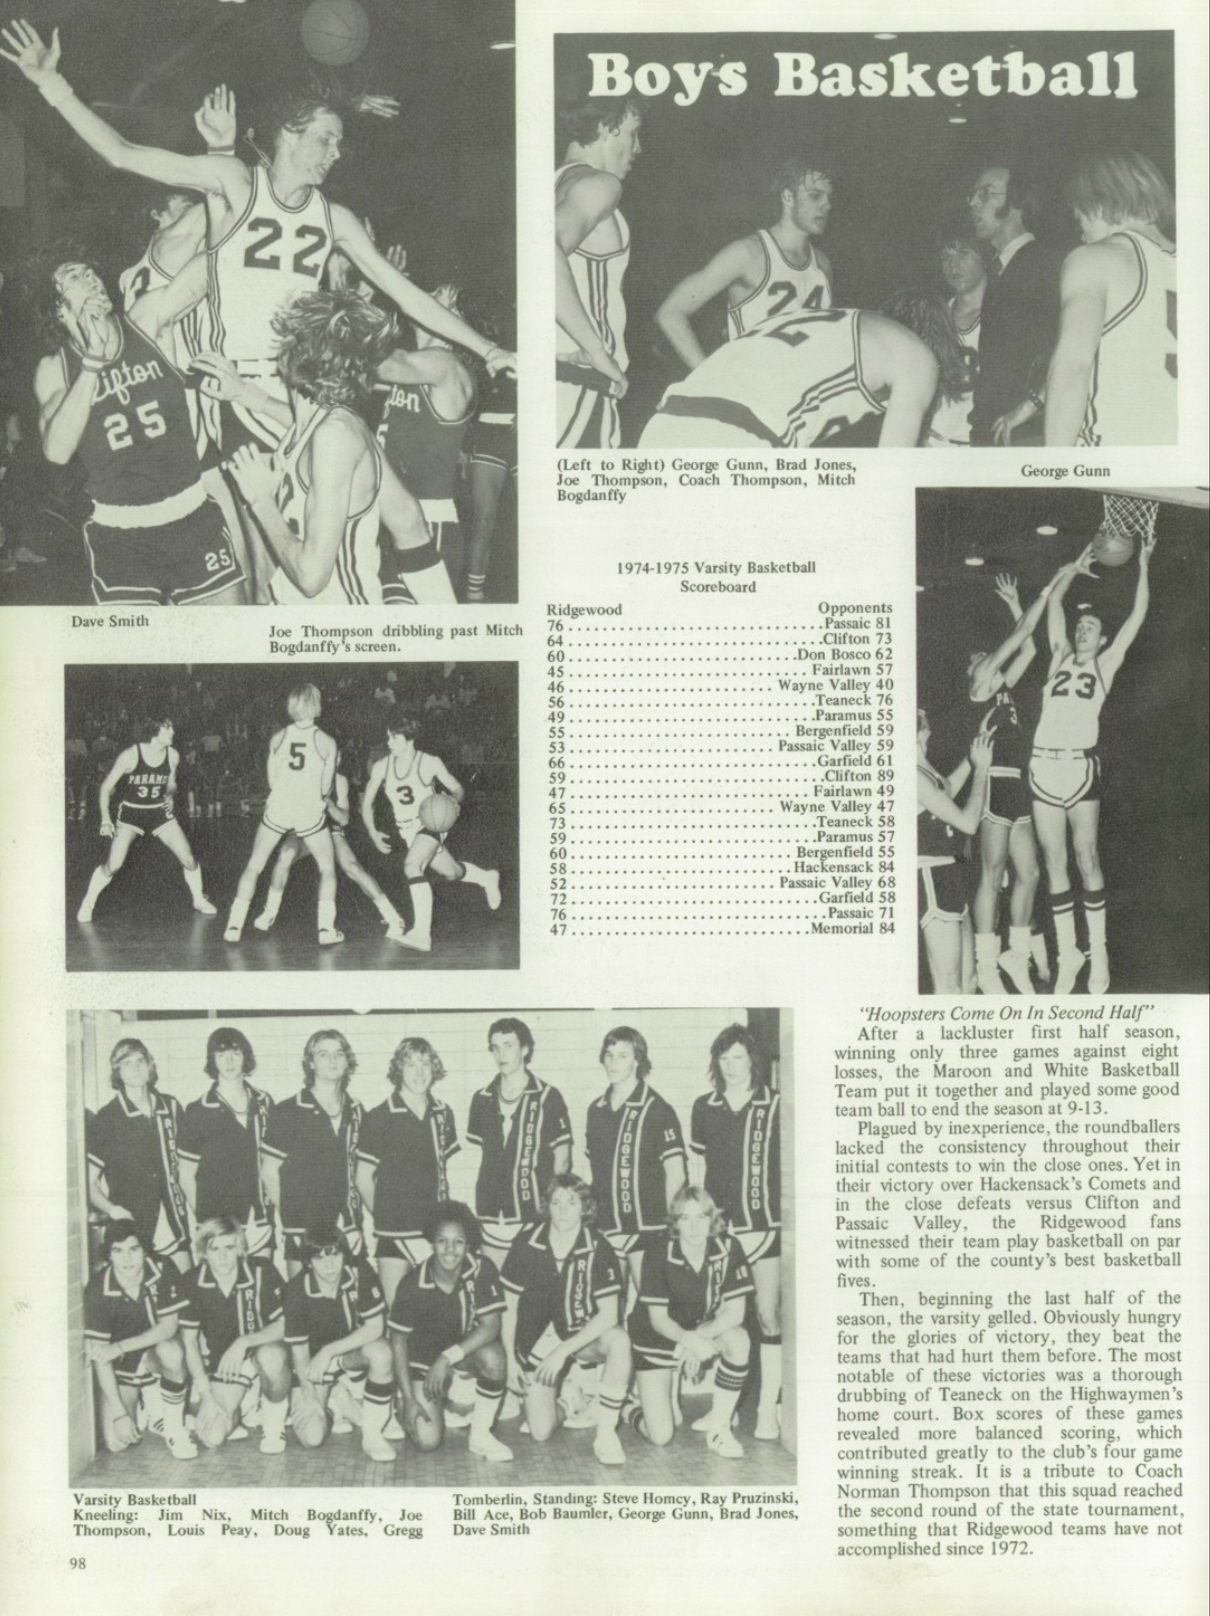 1975 Boys’ Basketball Team